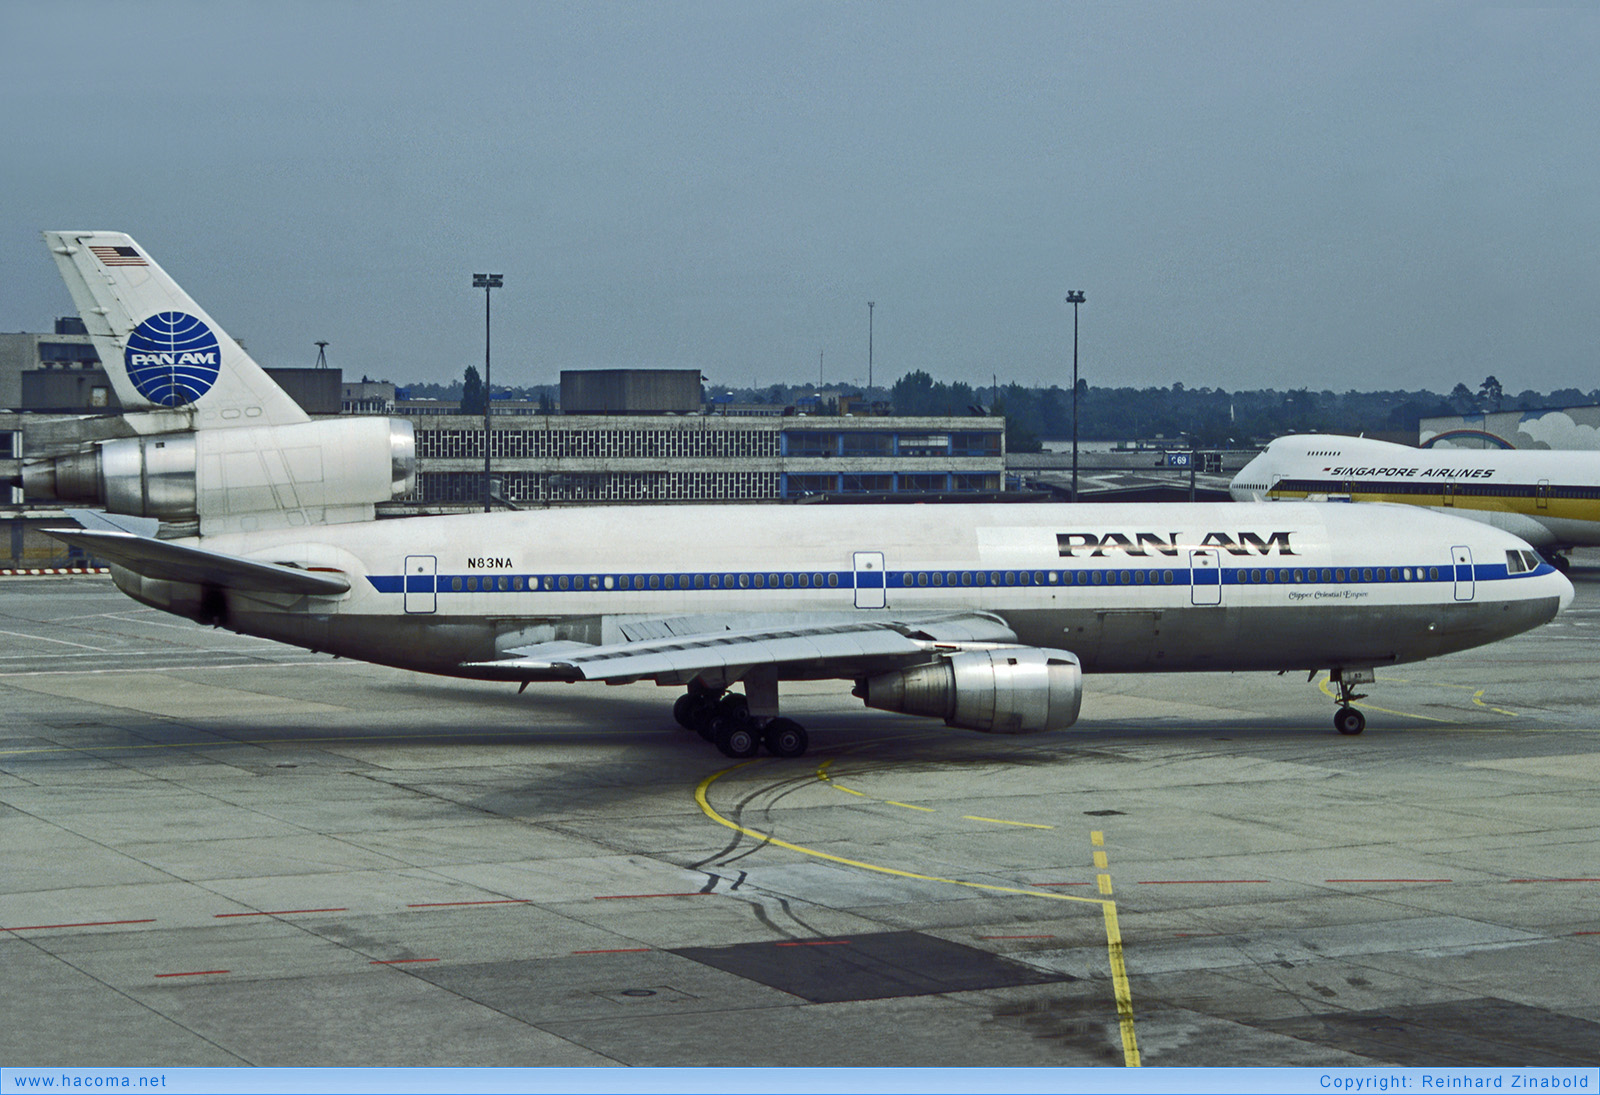 Photo of N83NA - Pan Am Clipper Celestial Empire - Frankfurt International Airport